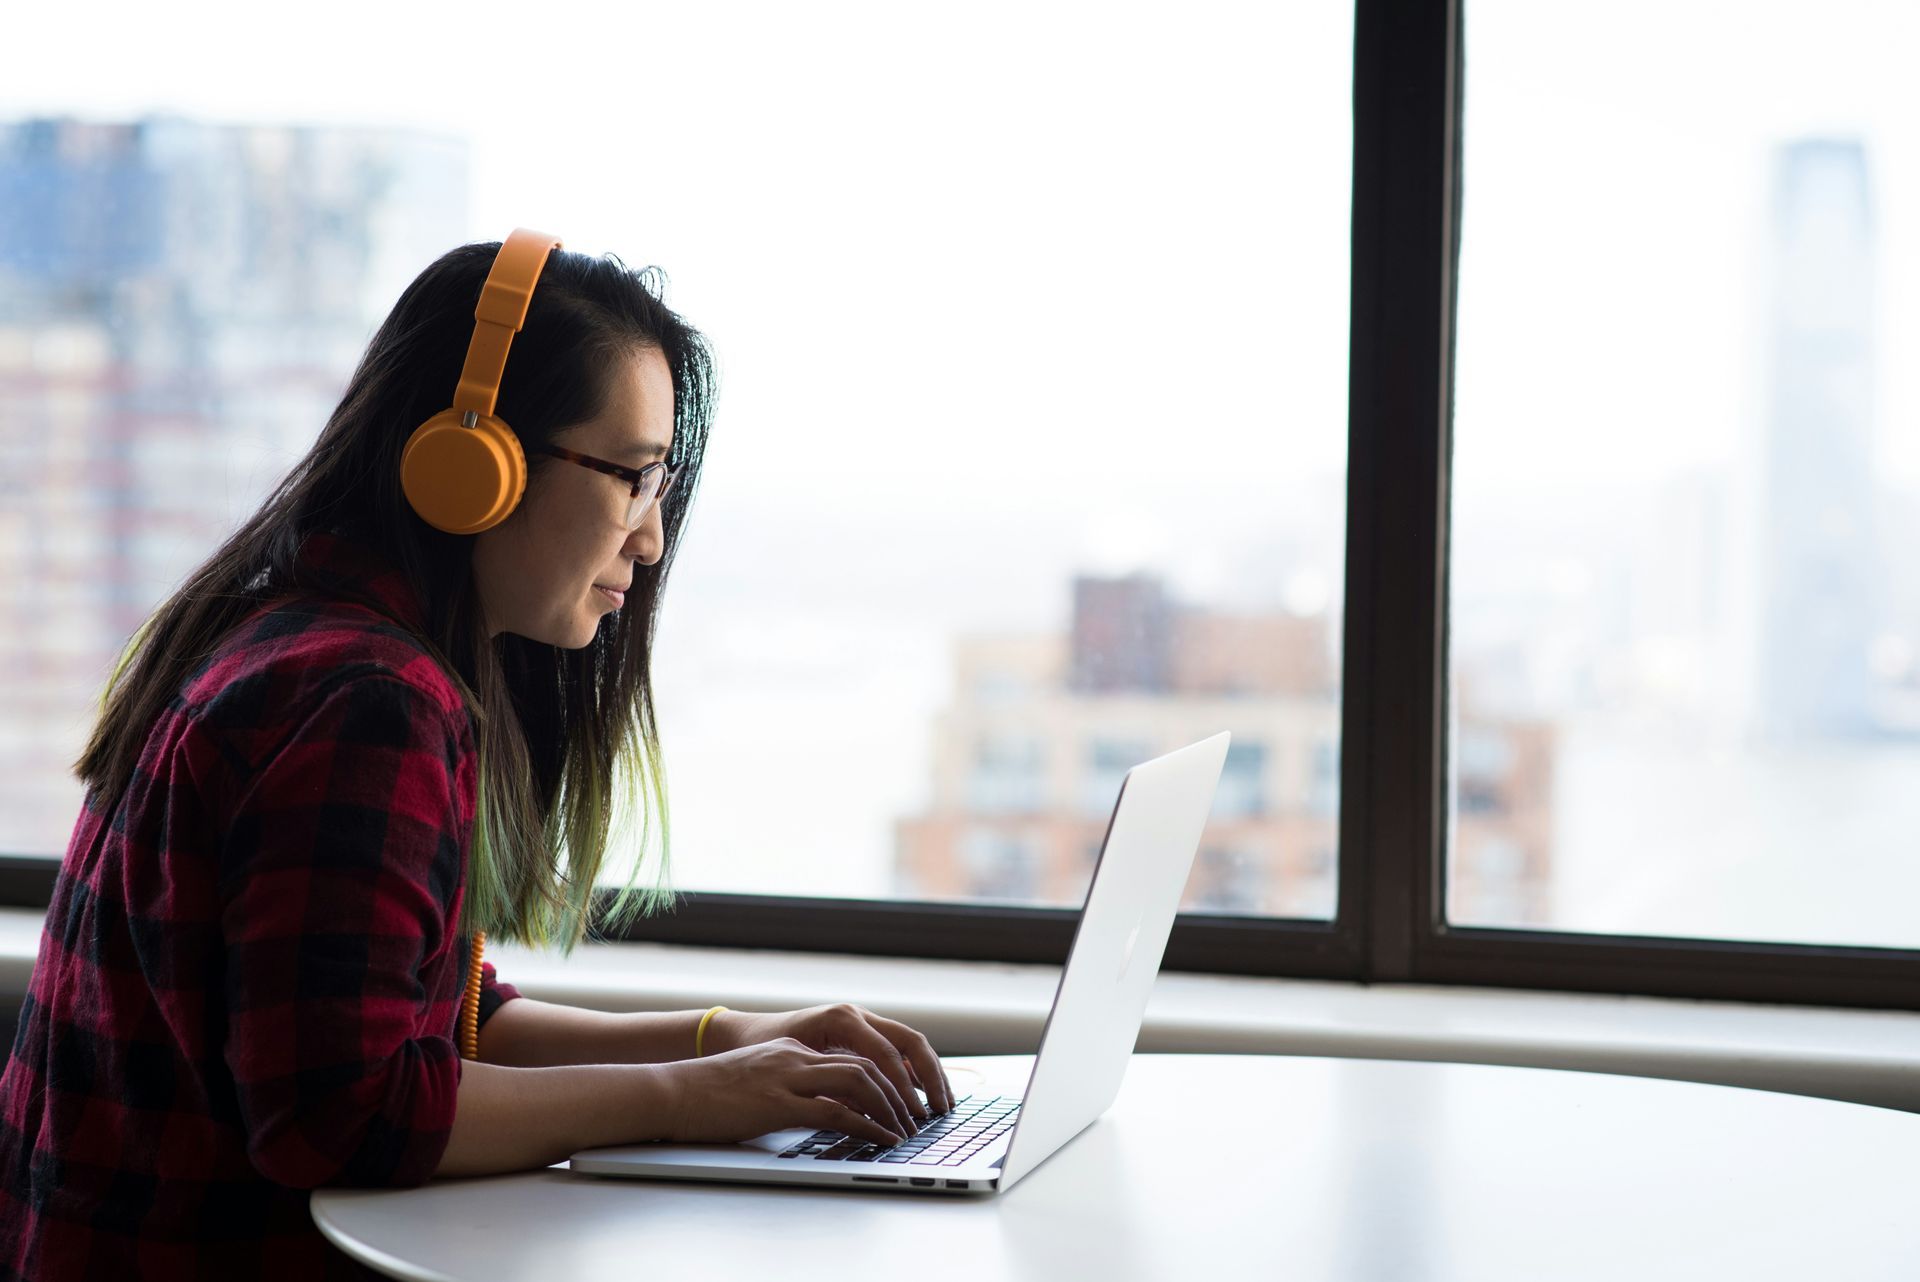 Women who had autism sitting at her work computer wearing headphones. 